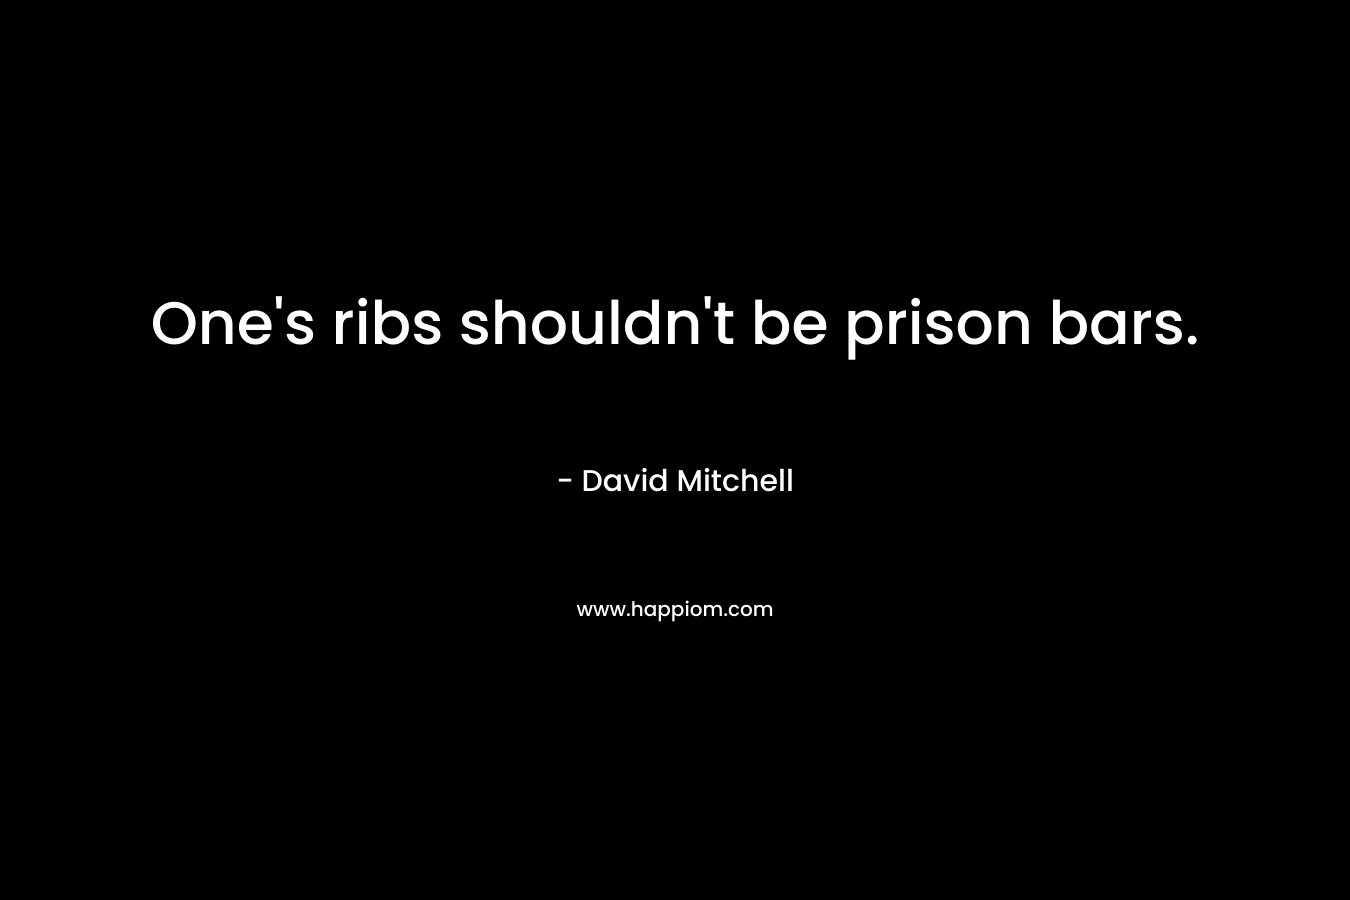 One’s ribs shouldn’t be prison bars. – David Mitchell